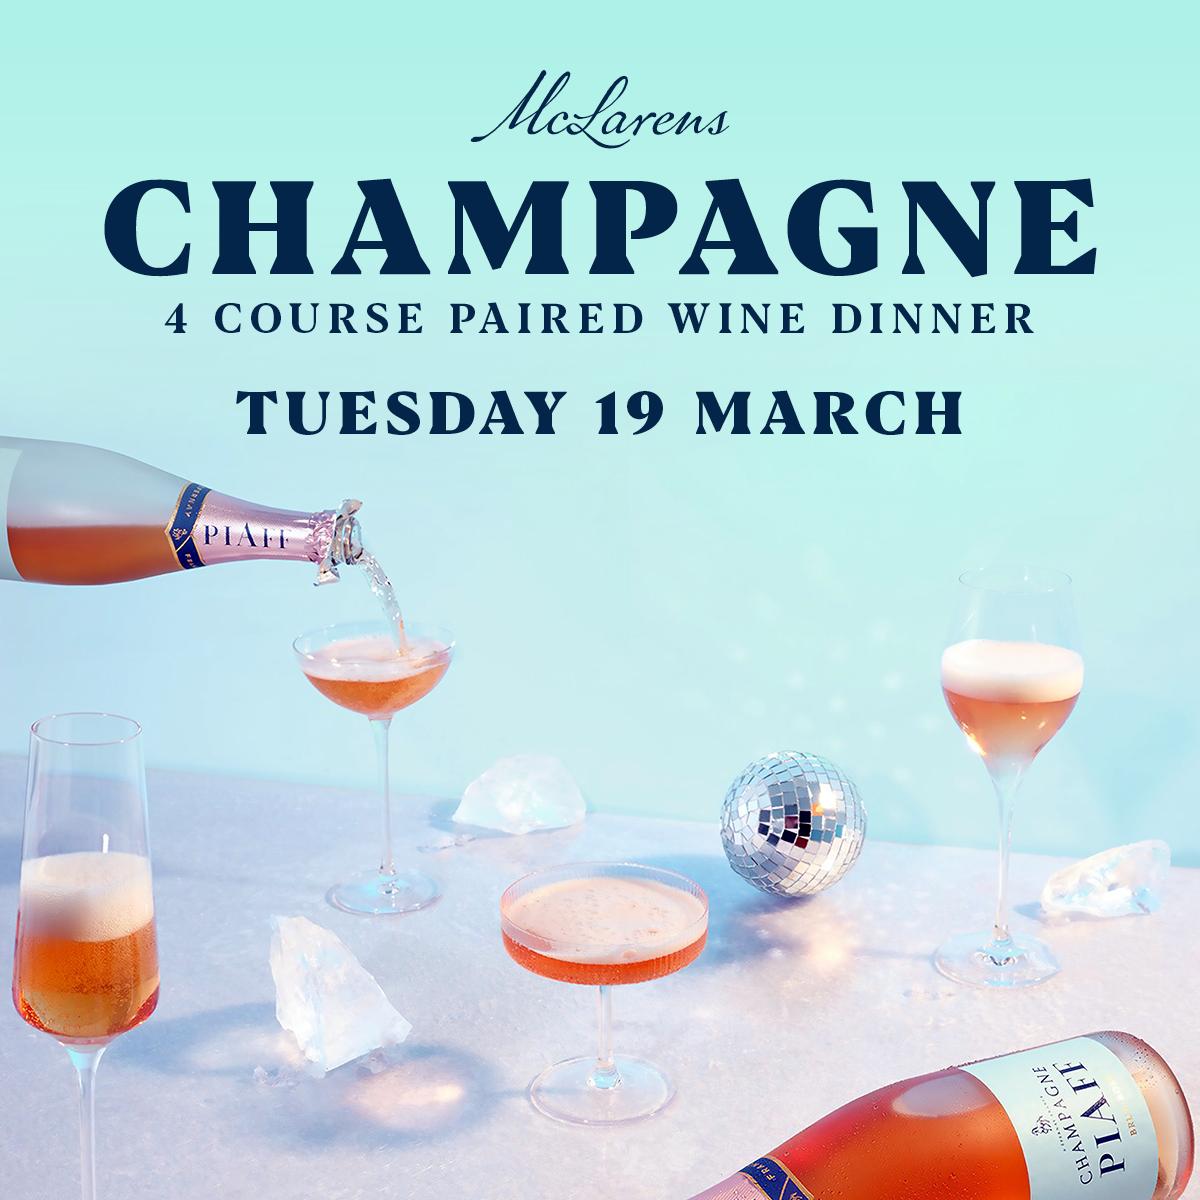 Piaff Champagne dinner promo